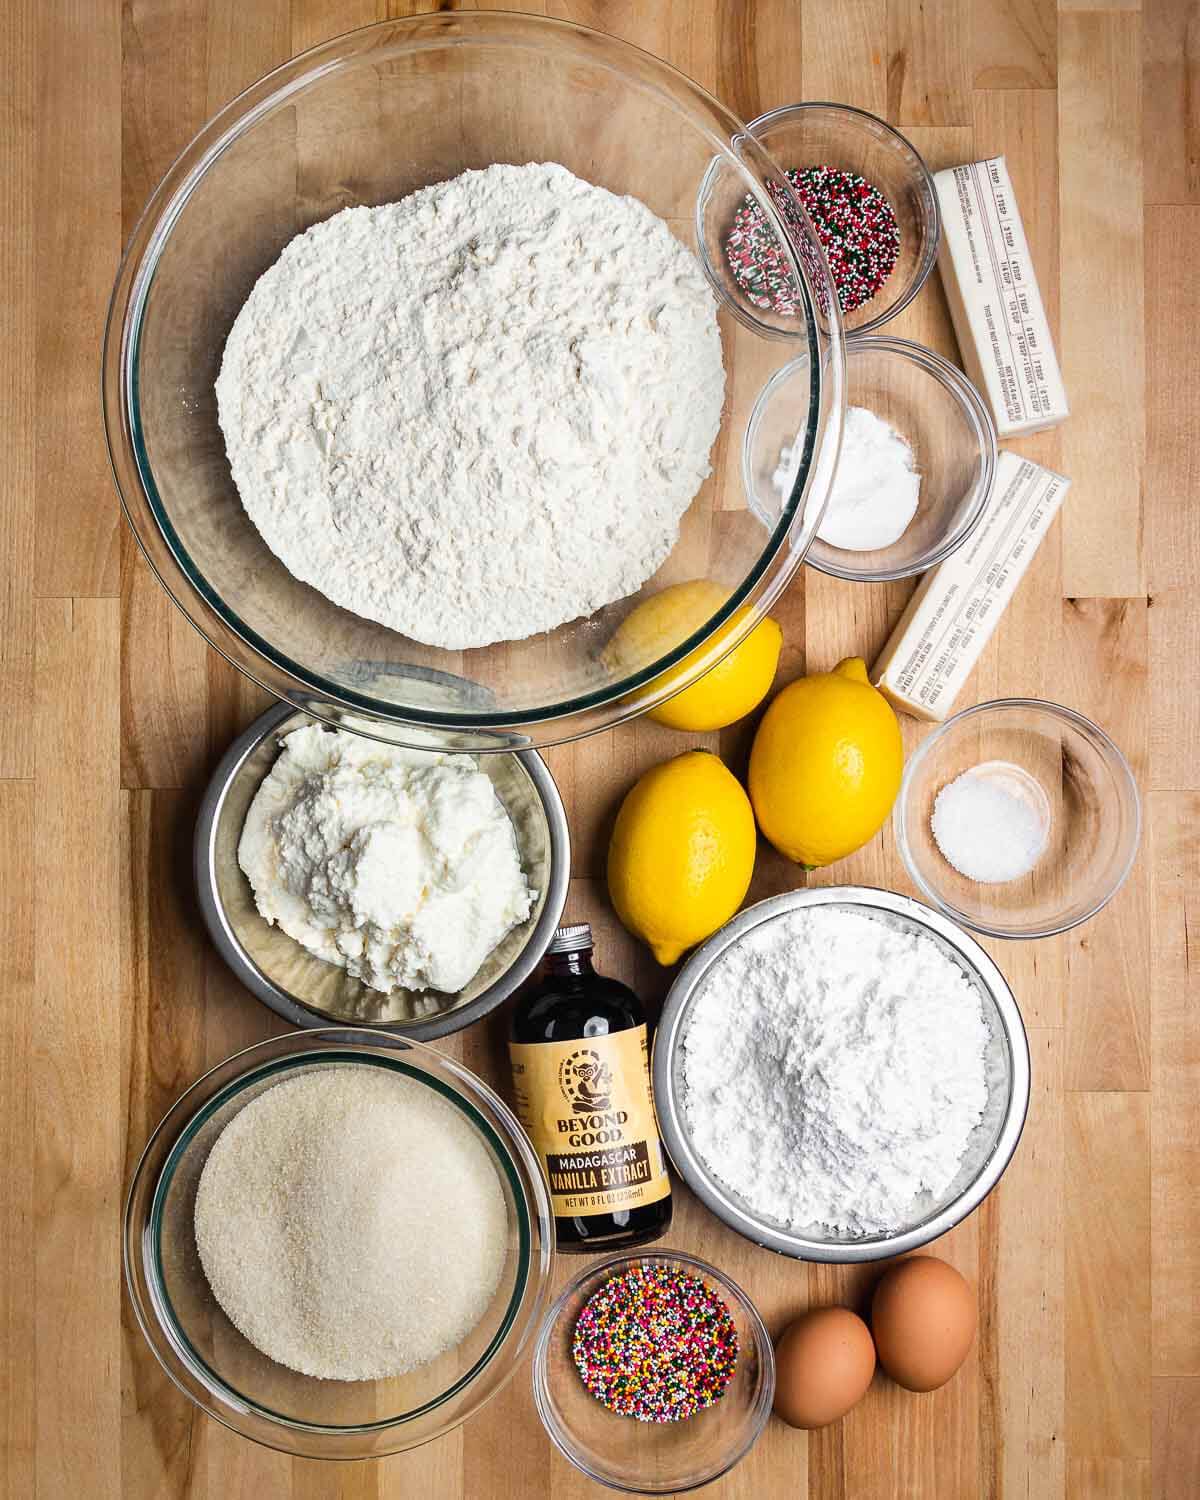 Ingredients shown: flour, sprinkles, butter, baking soda, baking powder, lemons, ricotta, vanilla extract, sugar, and eggs.